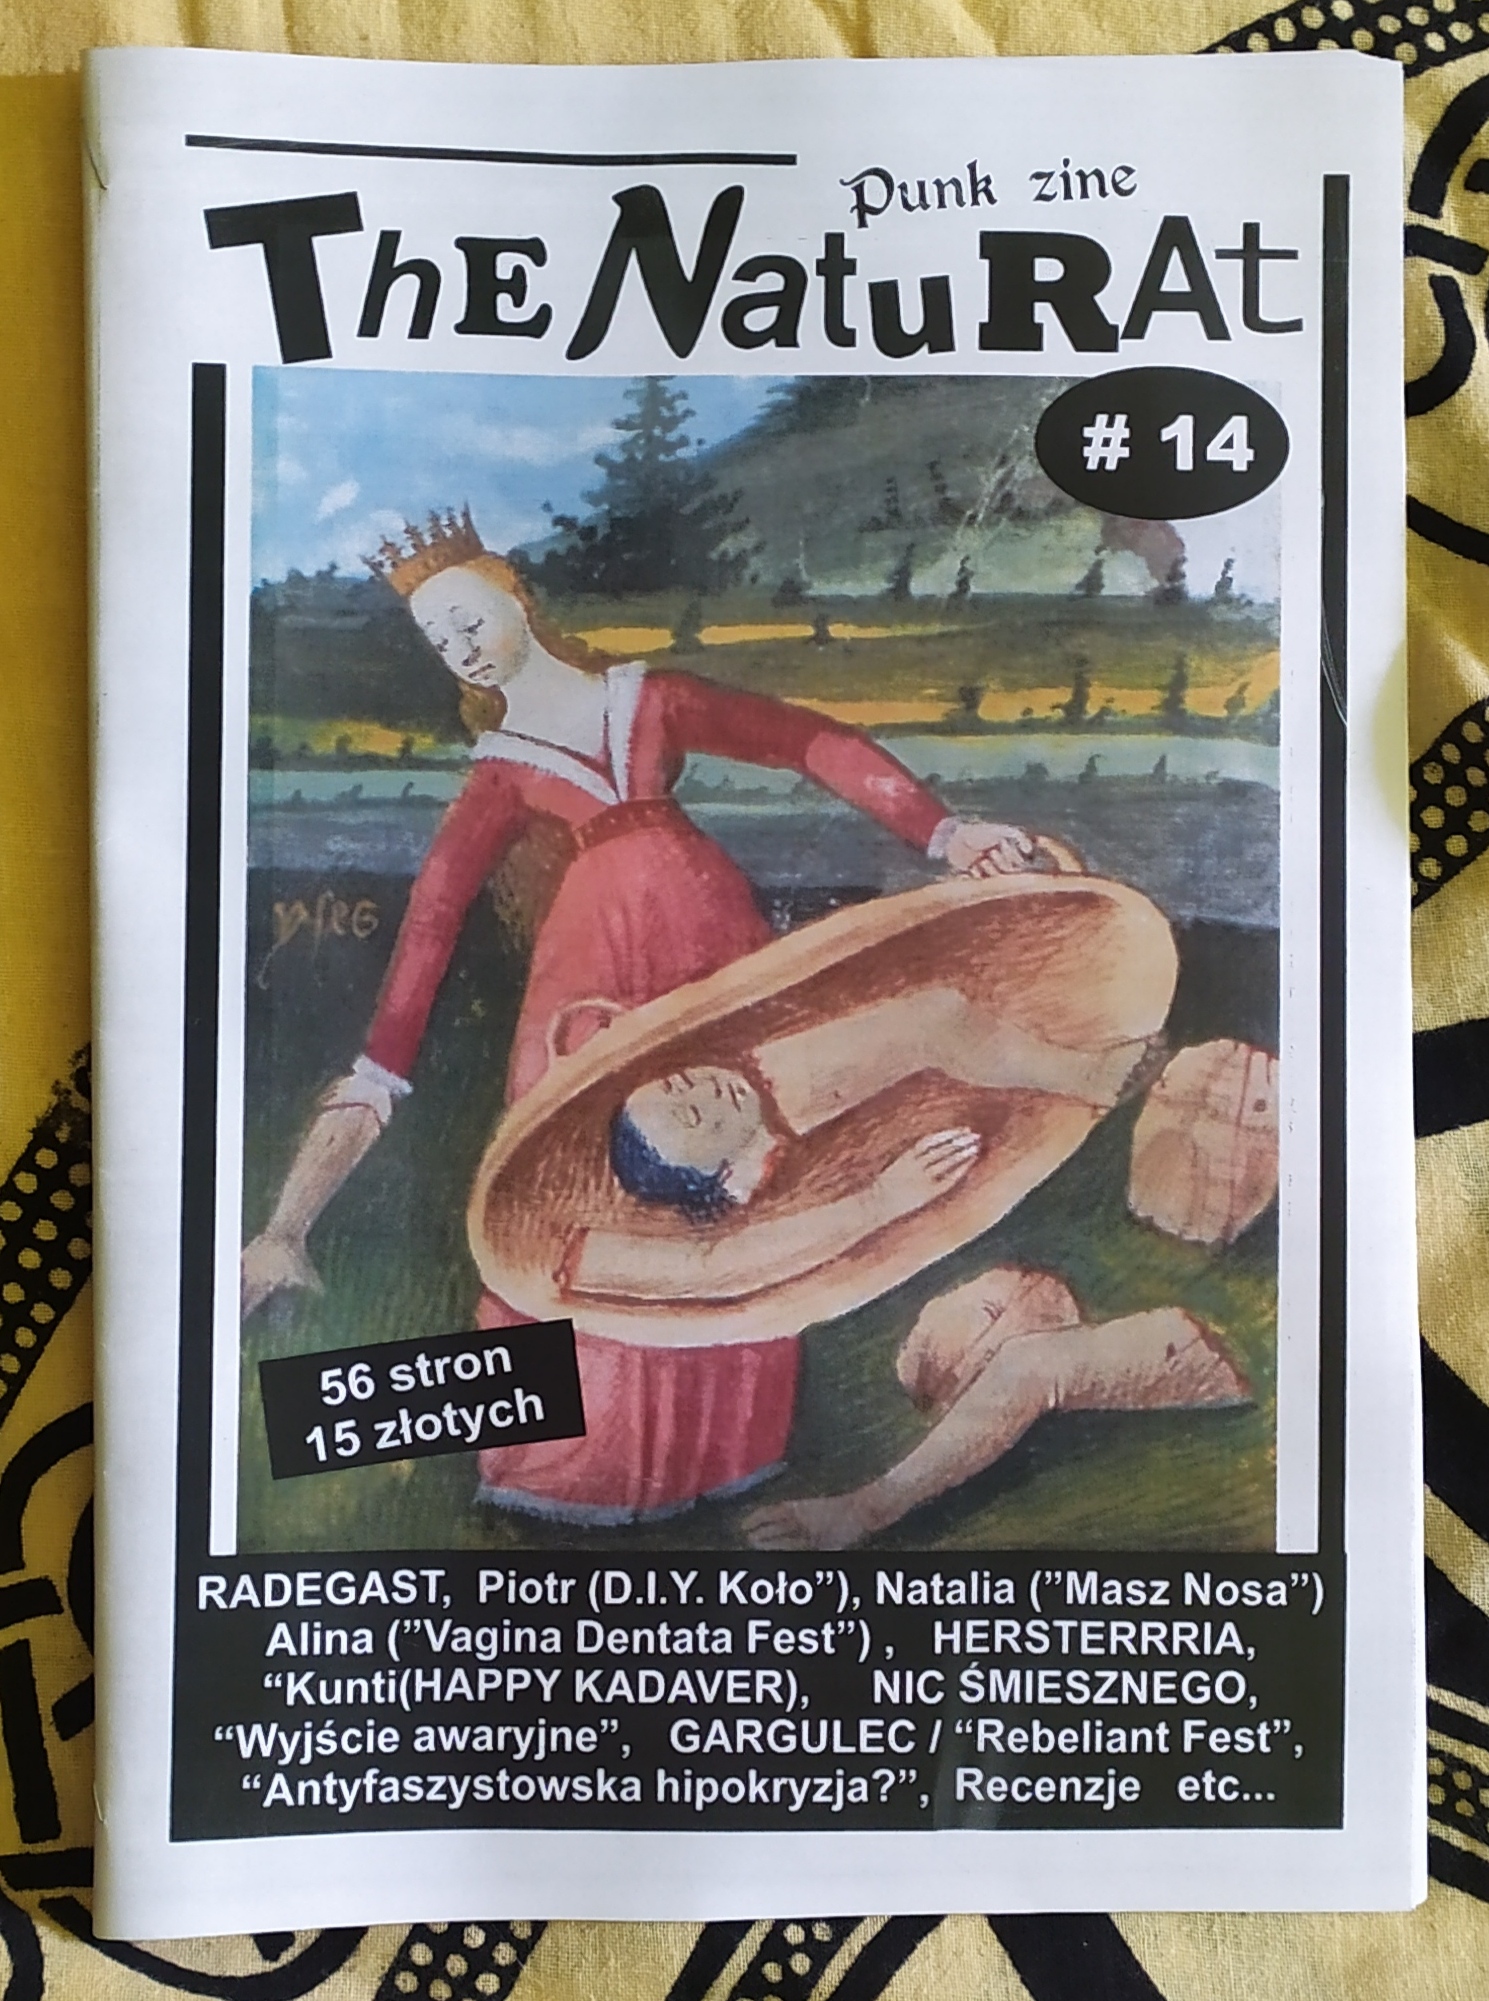 The Naturat #14